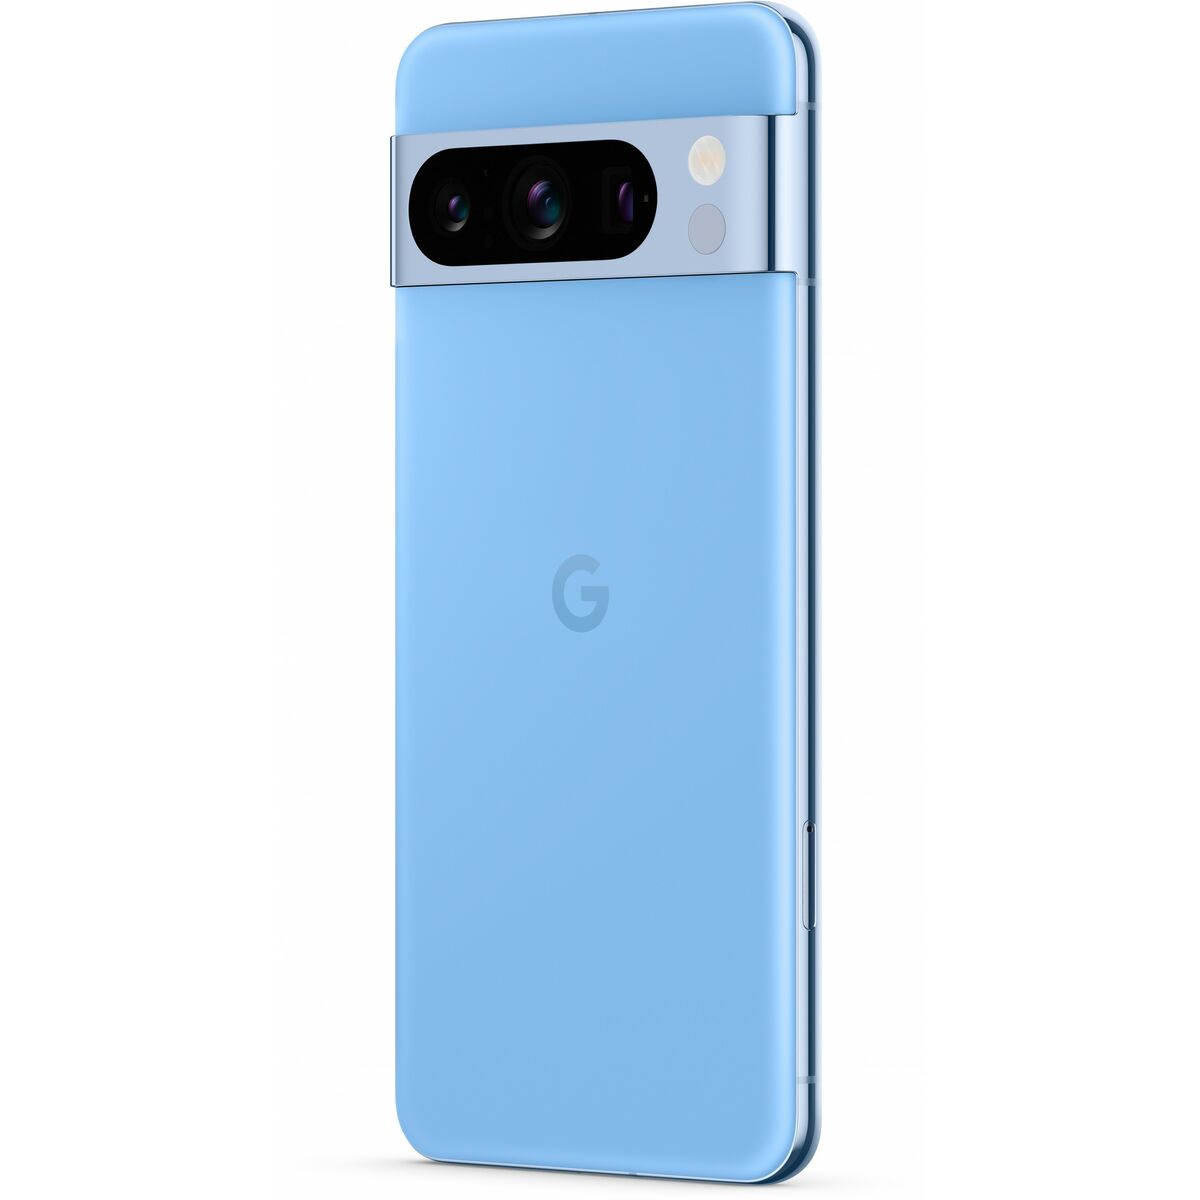 Smartphone Google GA04915-GB 256 GB 12 GB RAM Blauw